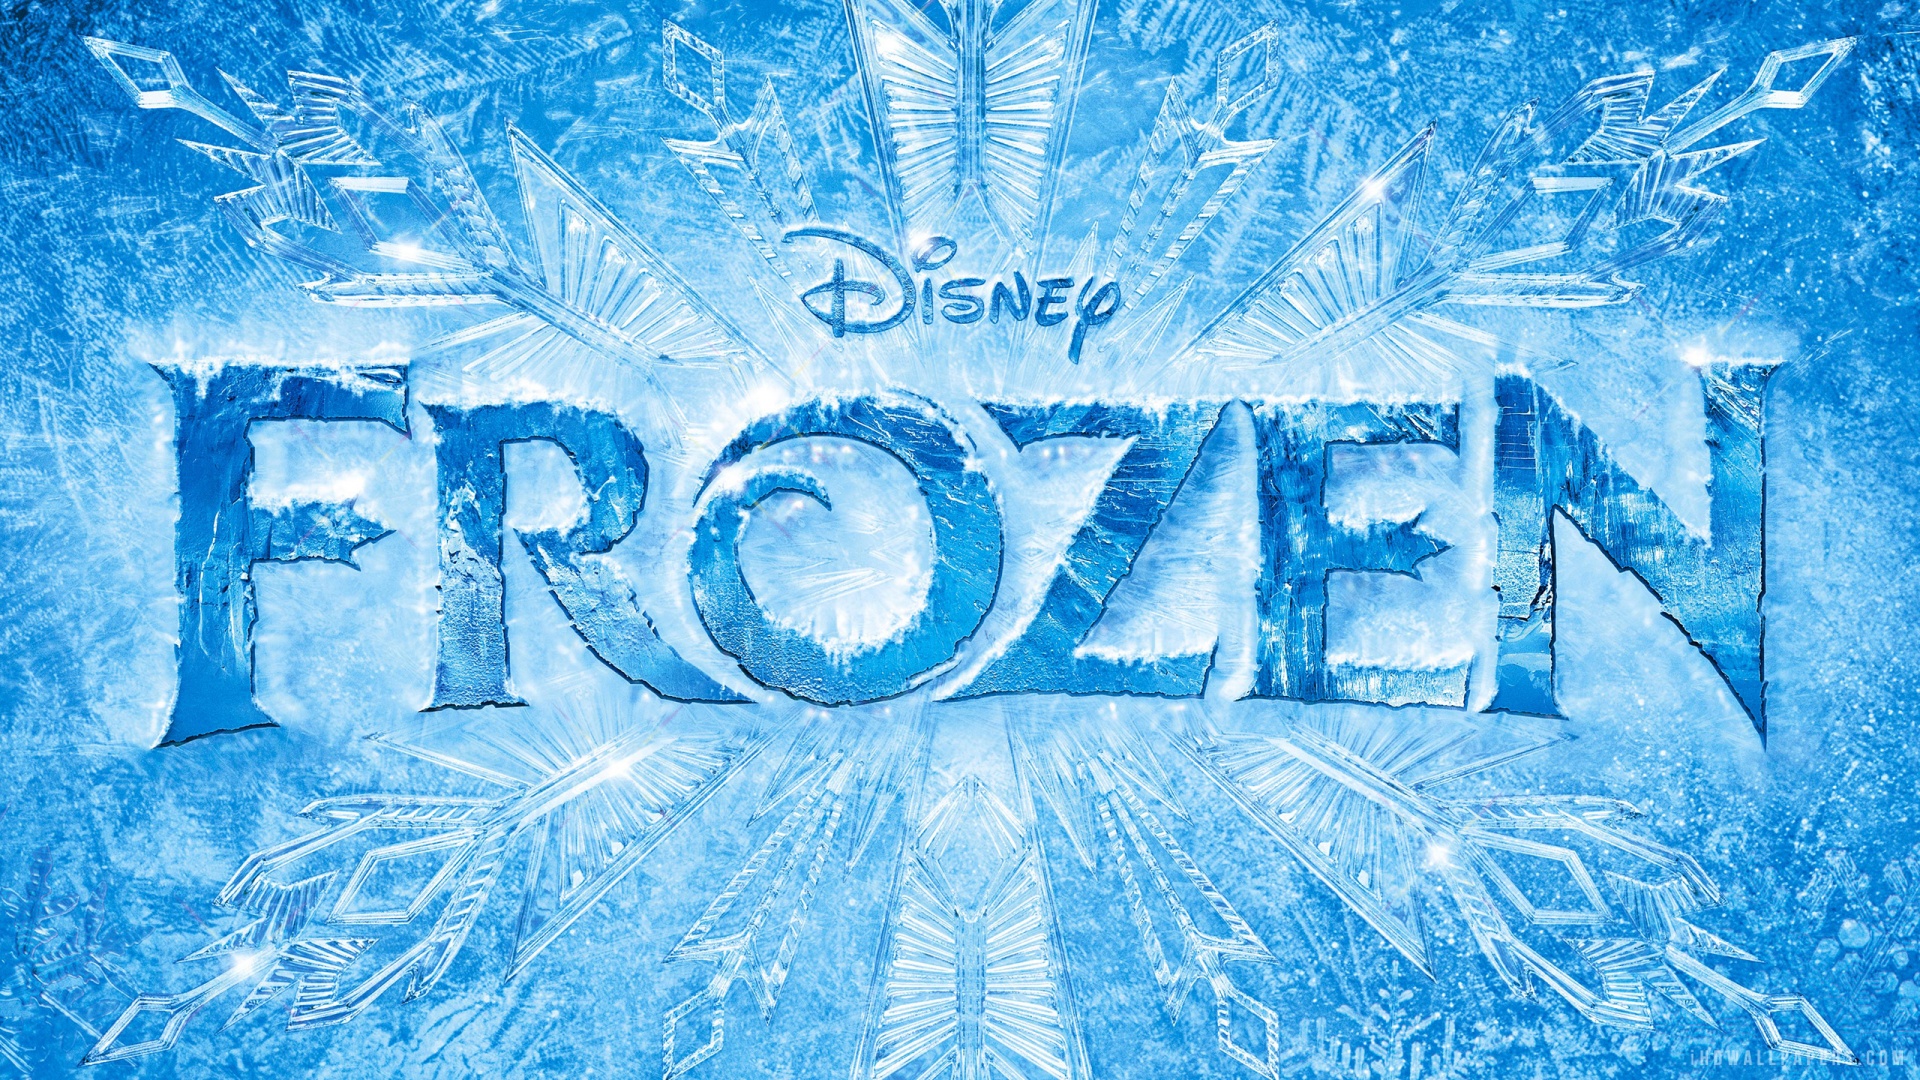 Disney Frozen Title Logo Recreation by sjvernon on DeviantArt